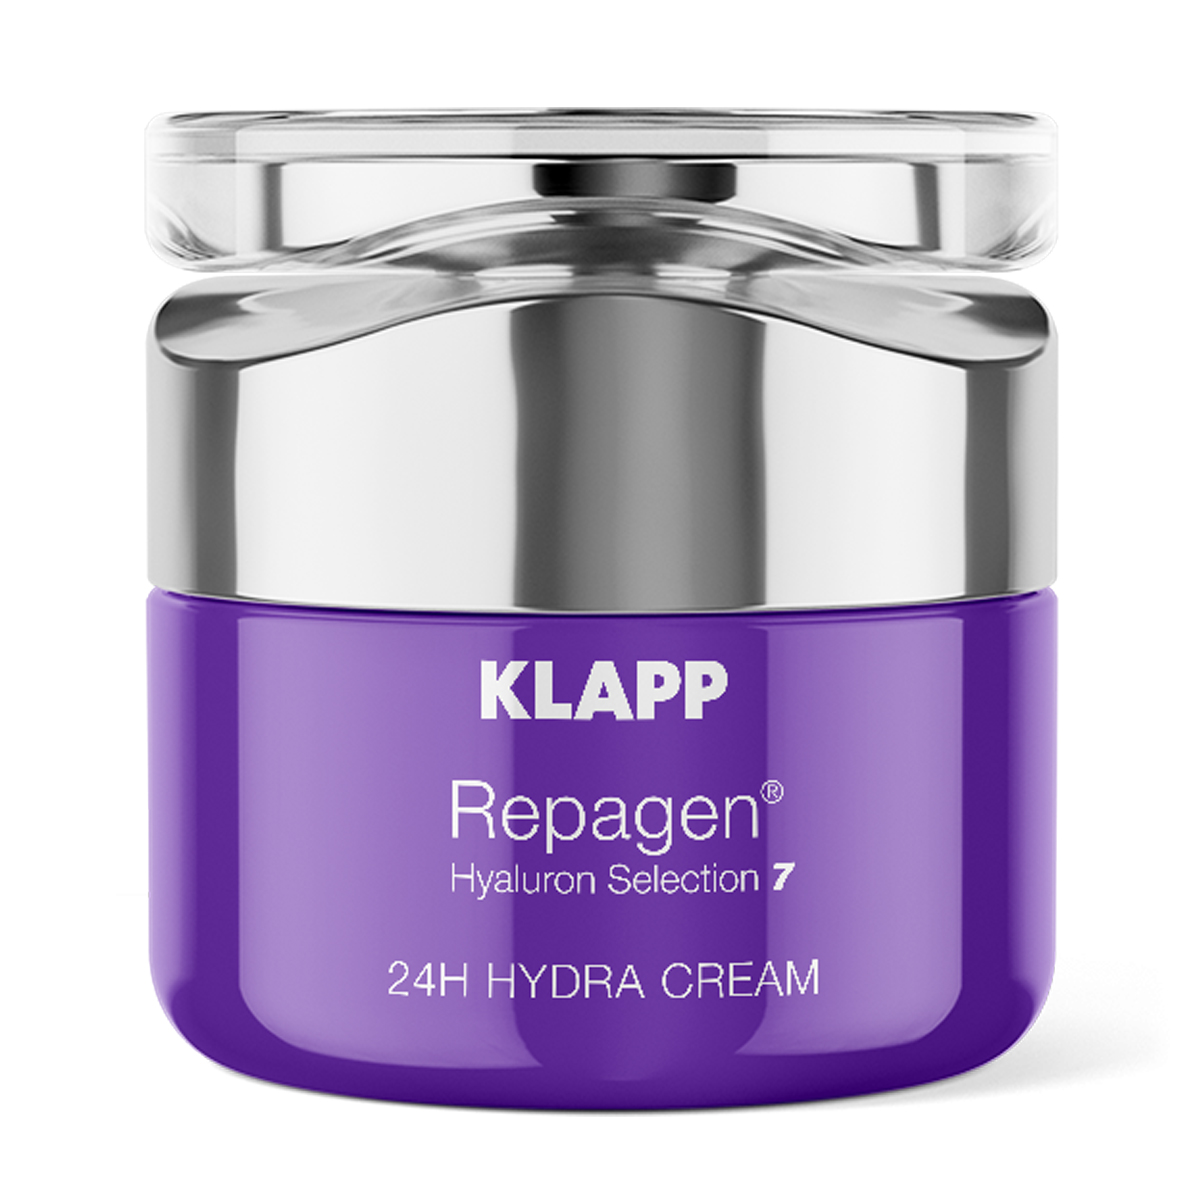 KLAPP Repagen Hyaluron Selection 7 24H Hydra Cream 50 ml